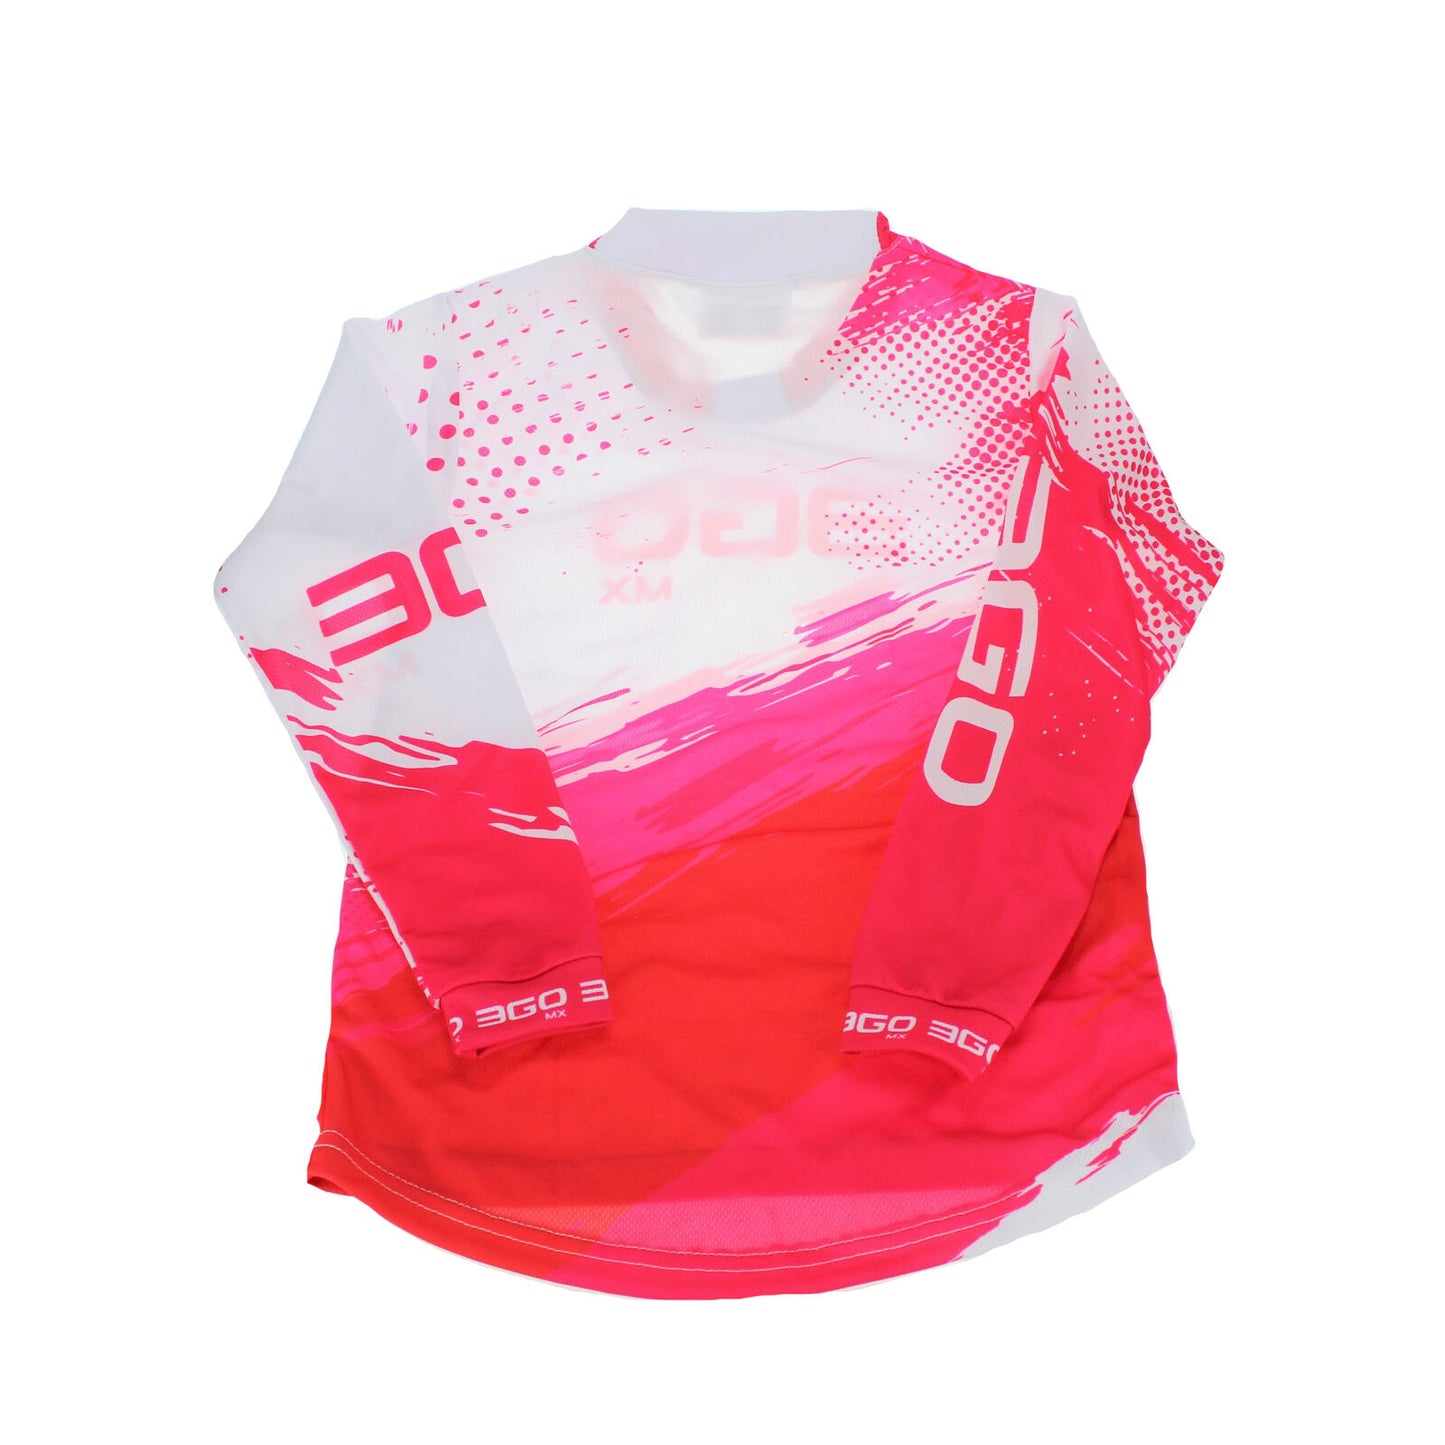 3GO Kids MX Race Jersey Top Pink